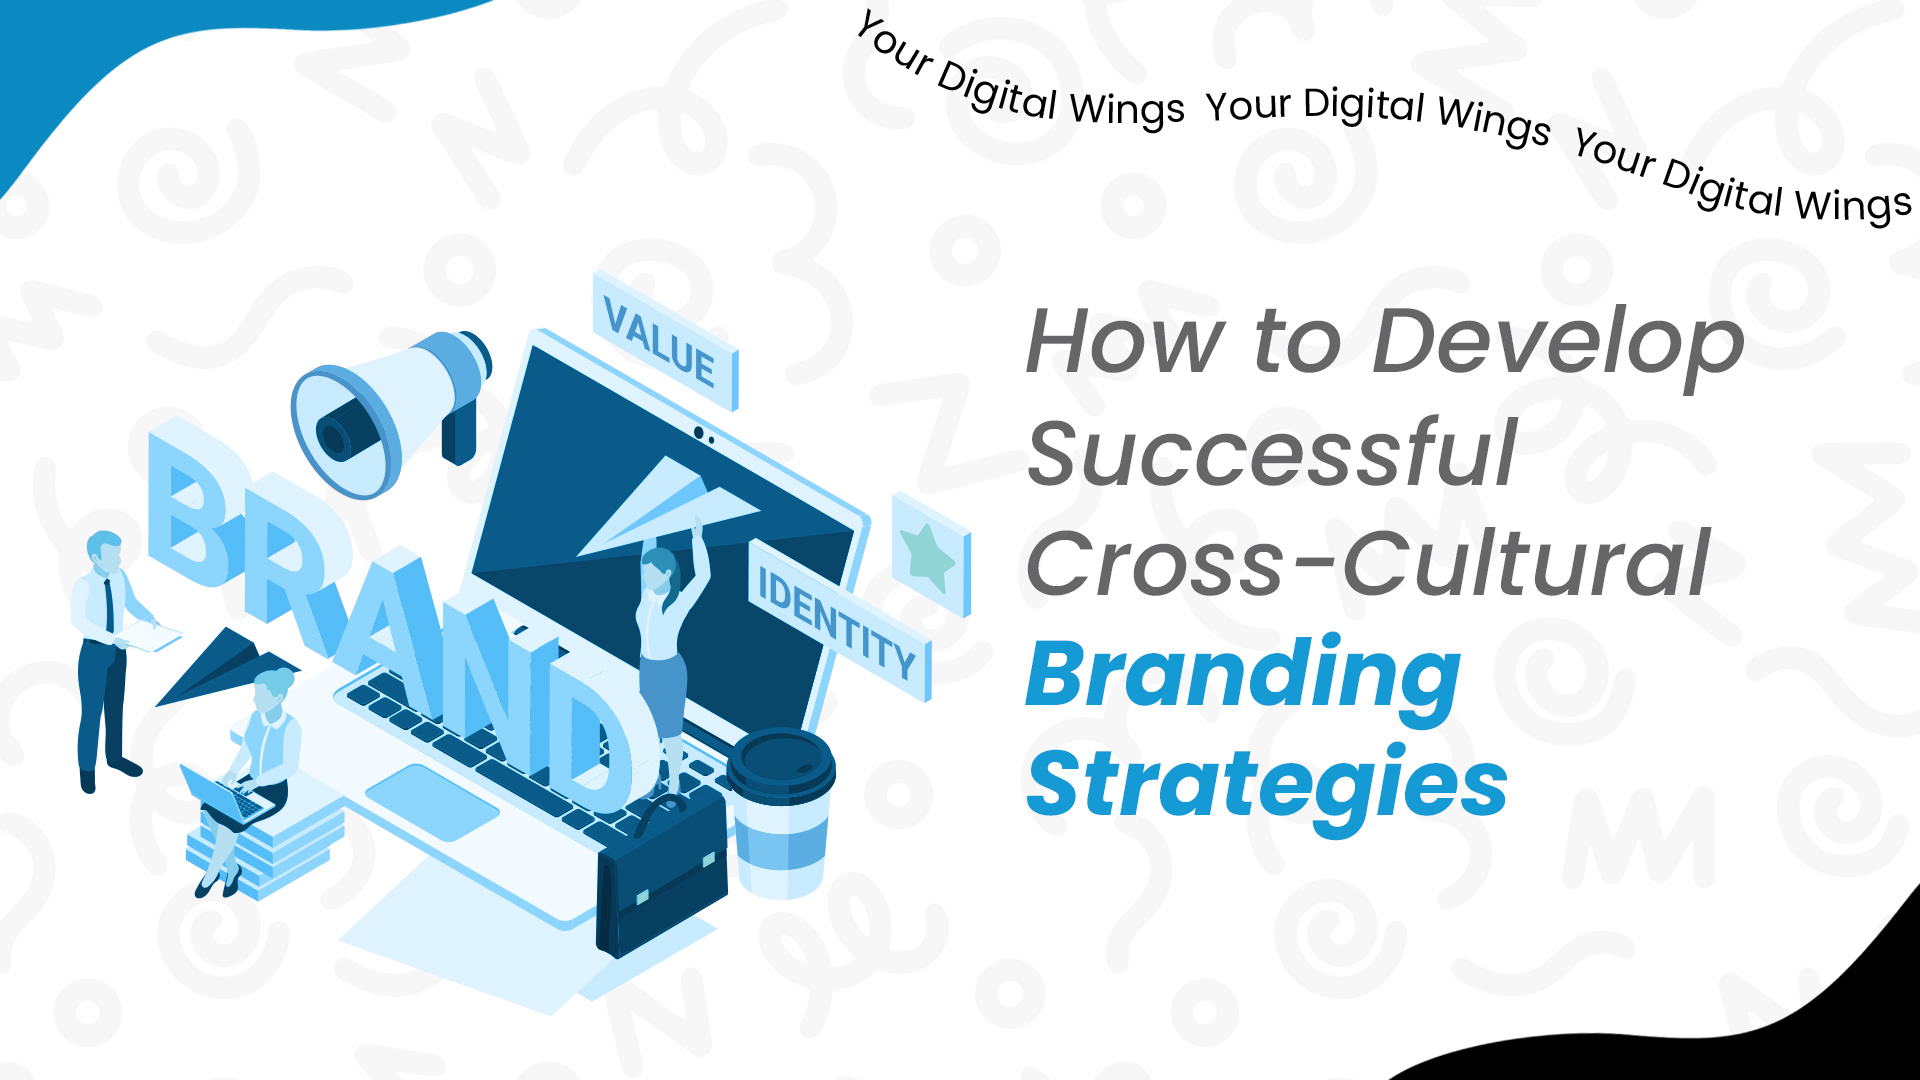 Cross cultural branding strategies